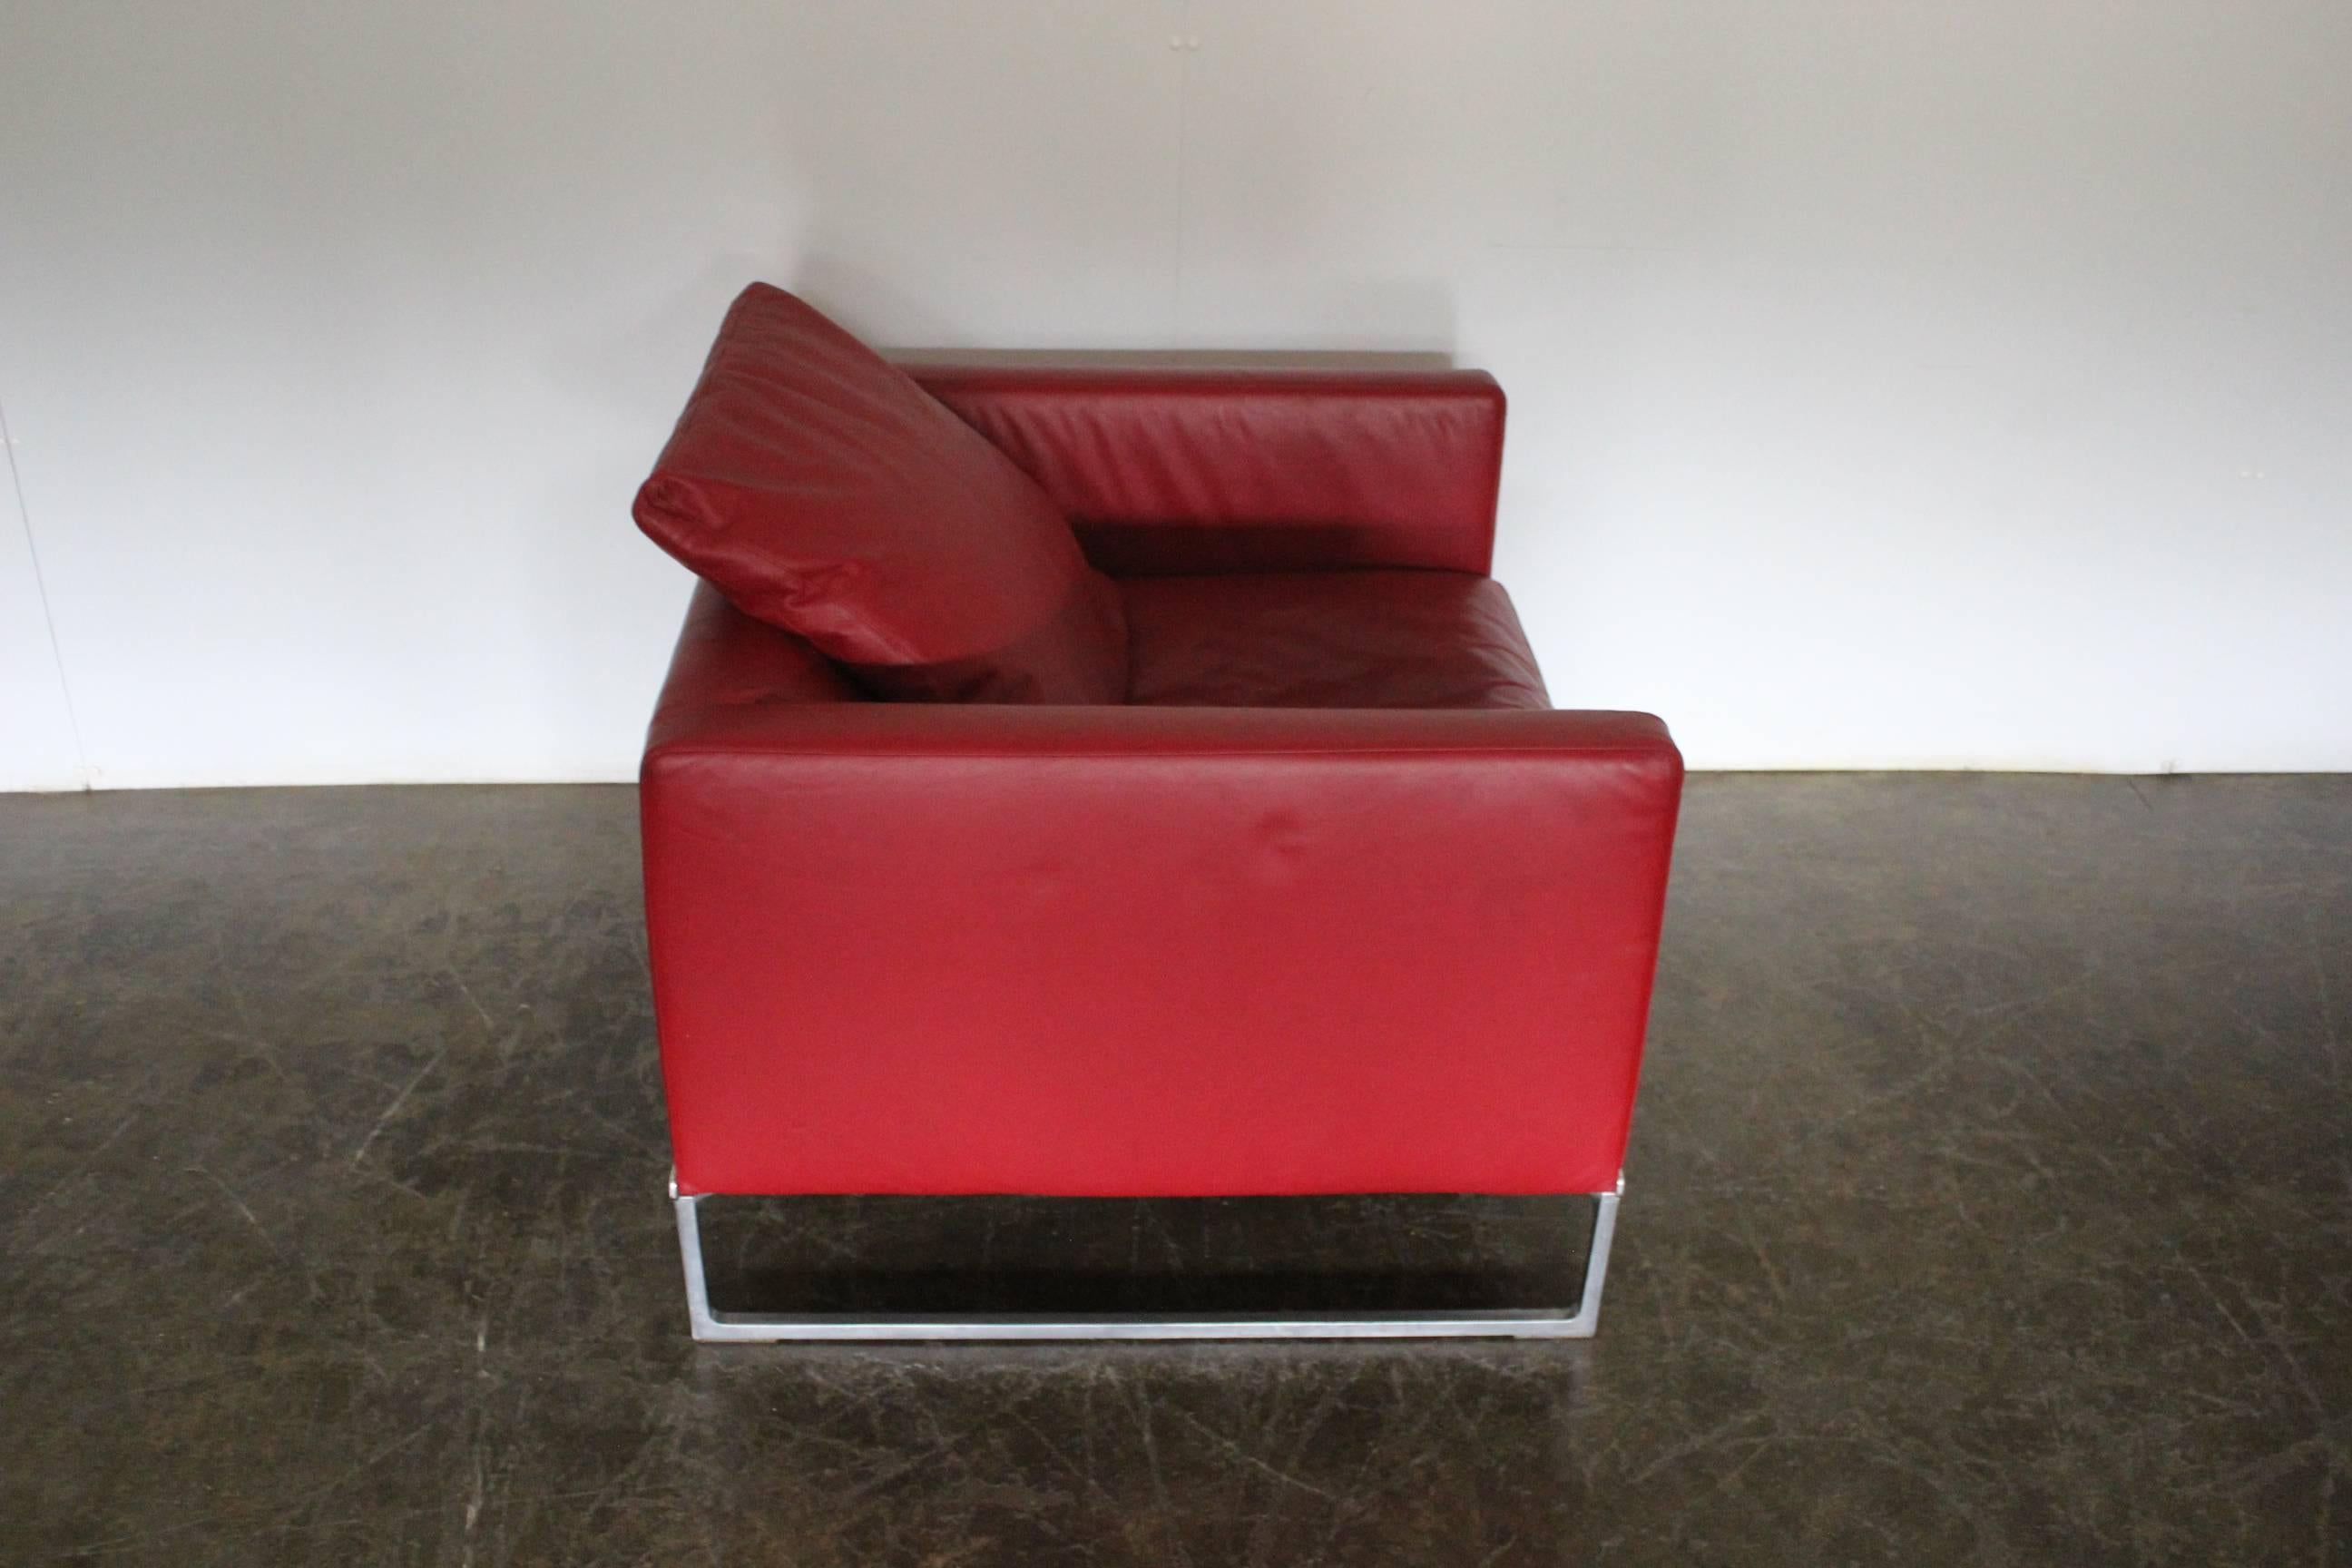 B&B Italia “Tight” Large Armchair in “Gamma” Red Leather 1